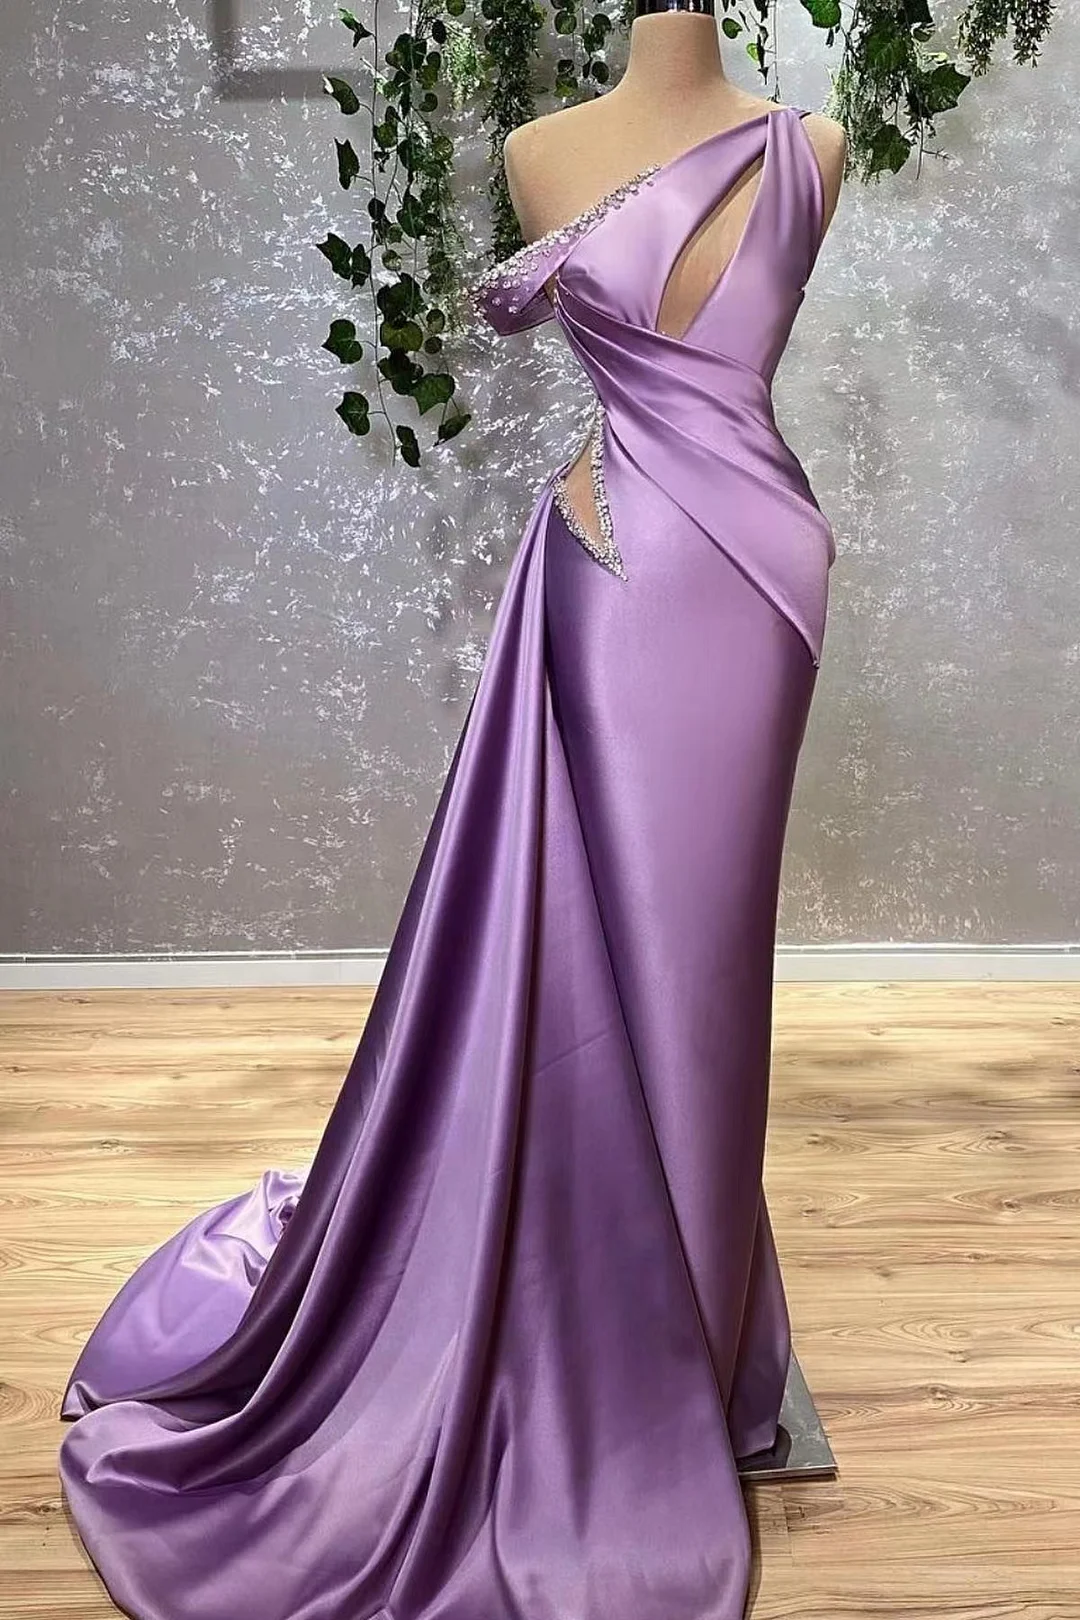 Miabel Lilac Off-The-Shoulder Mermaid Prom Dress Sleeveless With Rhinstone